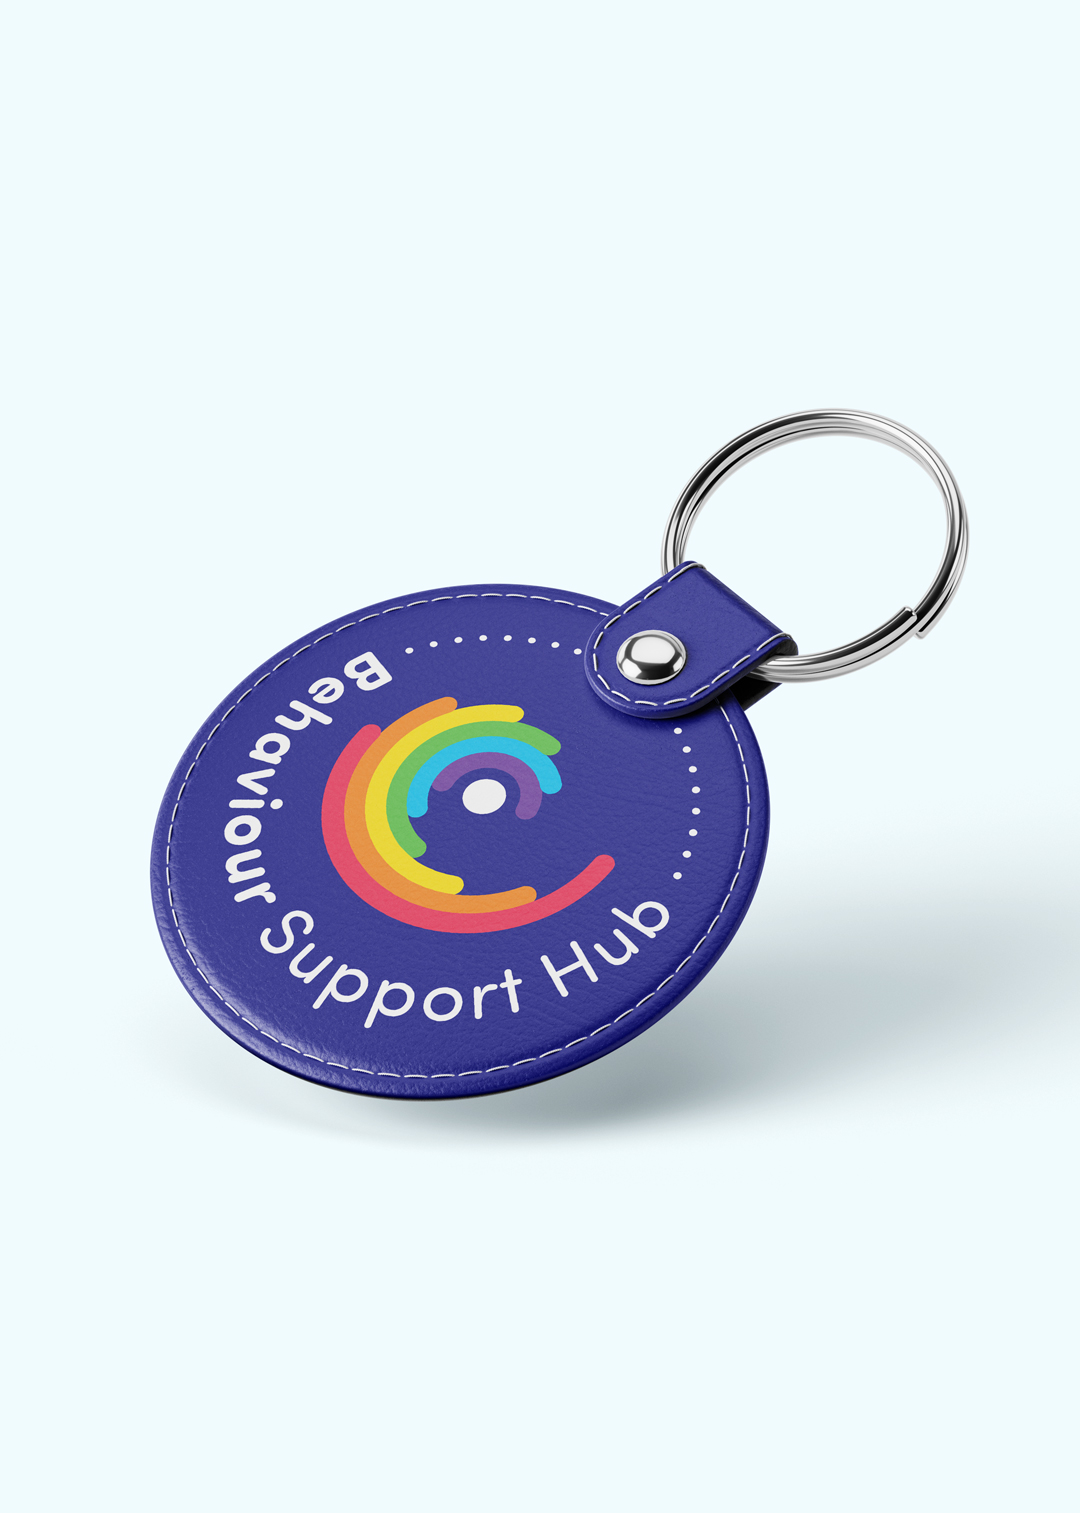 Behaviour Support Hub Logo Design